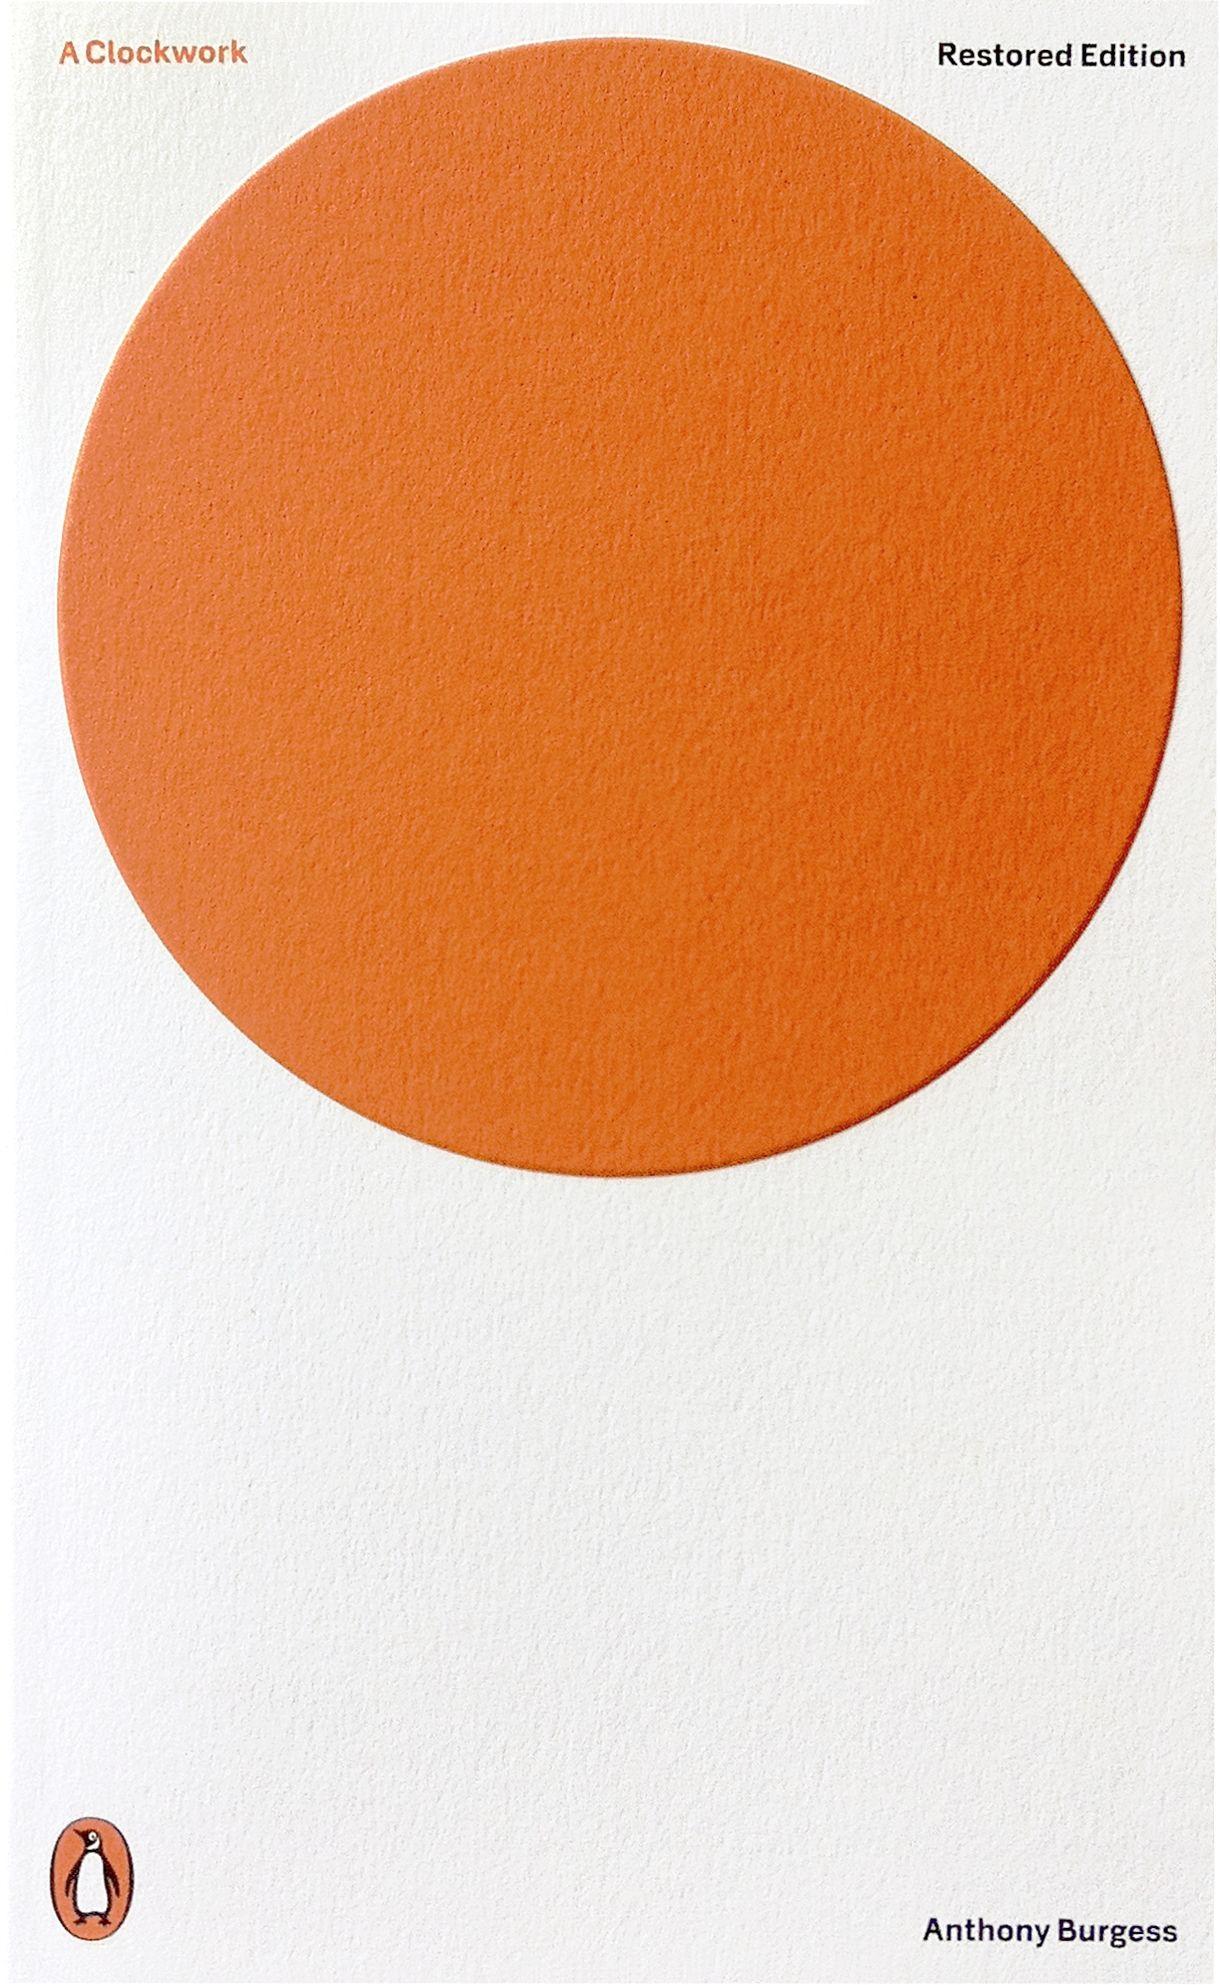 Orange Oval with Penguin Logo - A Clockwork Orange